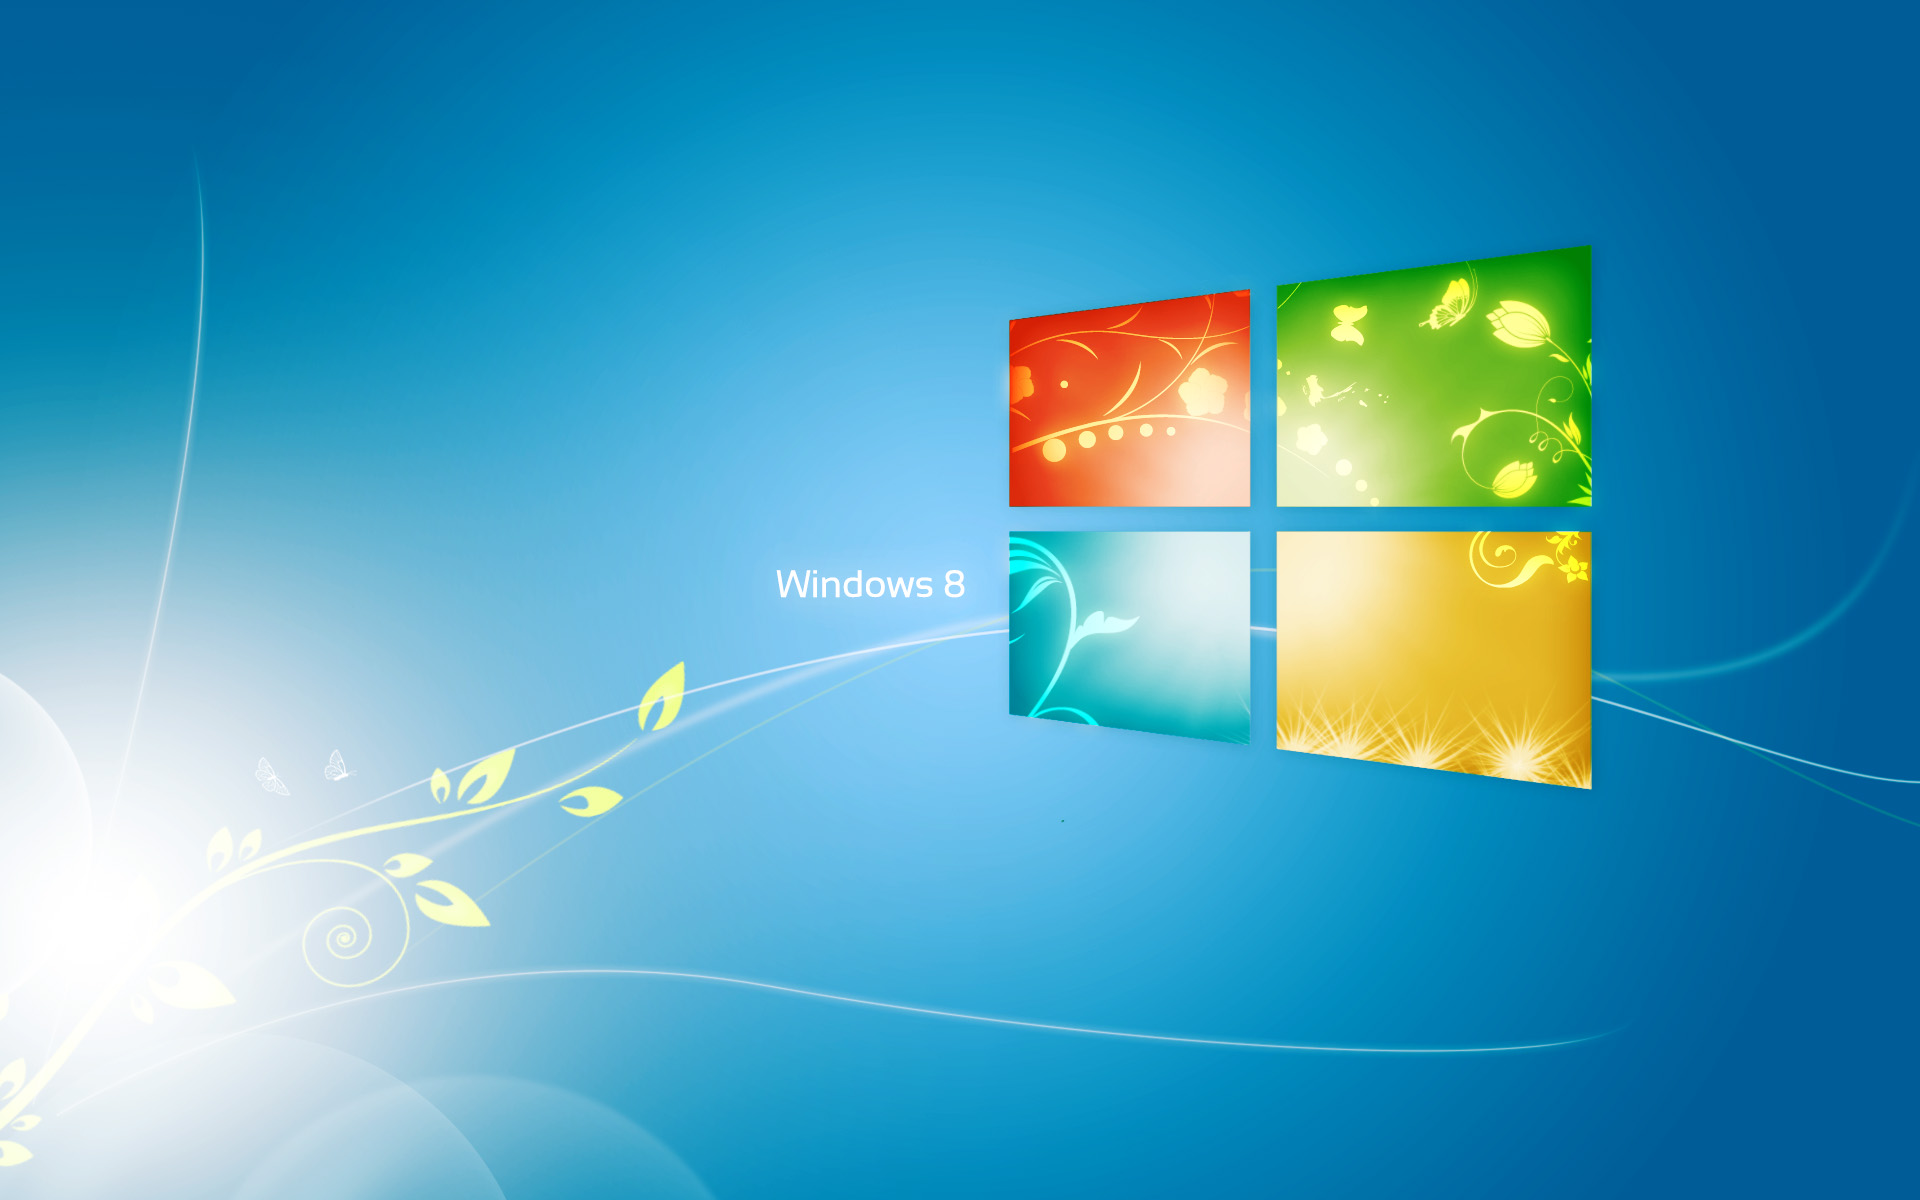 windows 8.1 wallpaper hd,betriebssystem,grafikdesign,himmel,technologie,bildschirmfoto